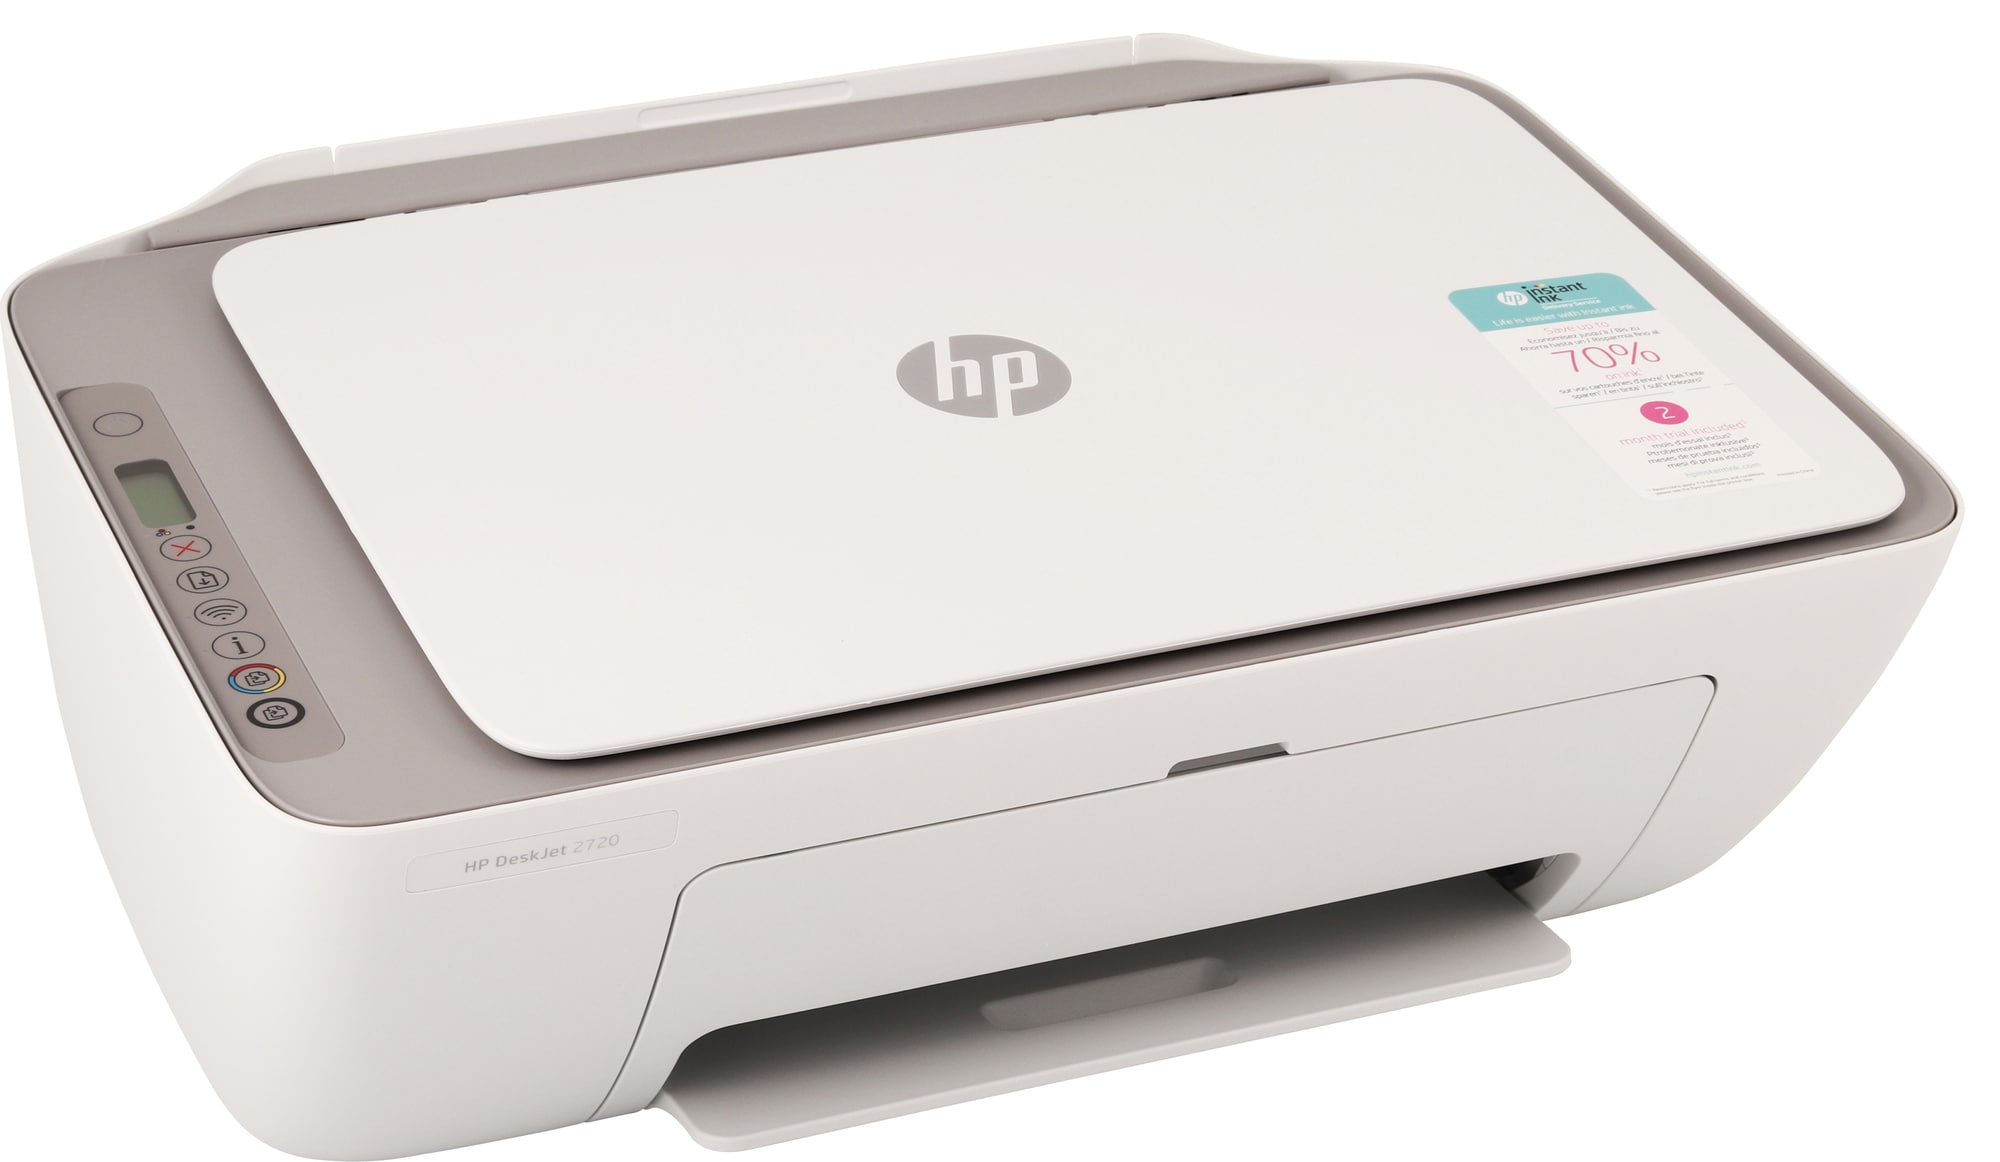 HP DeskJet 2720 multifunktionel printer | Elgiganten